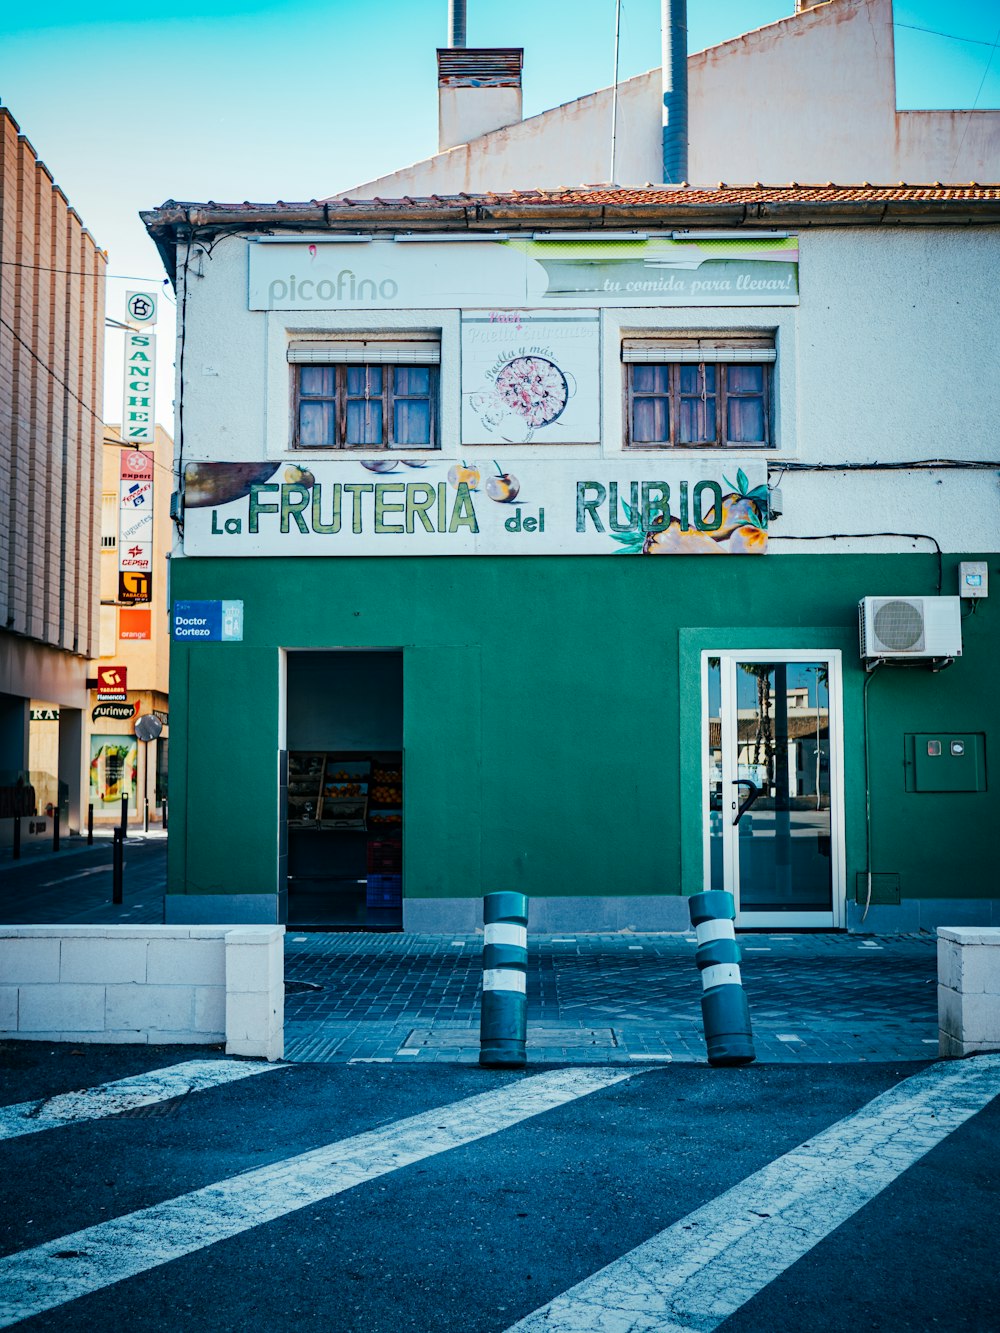 a green building with a sign that says la fruteria del rubio